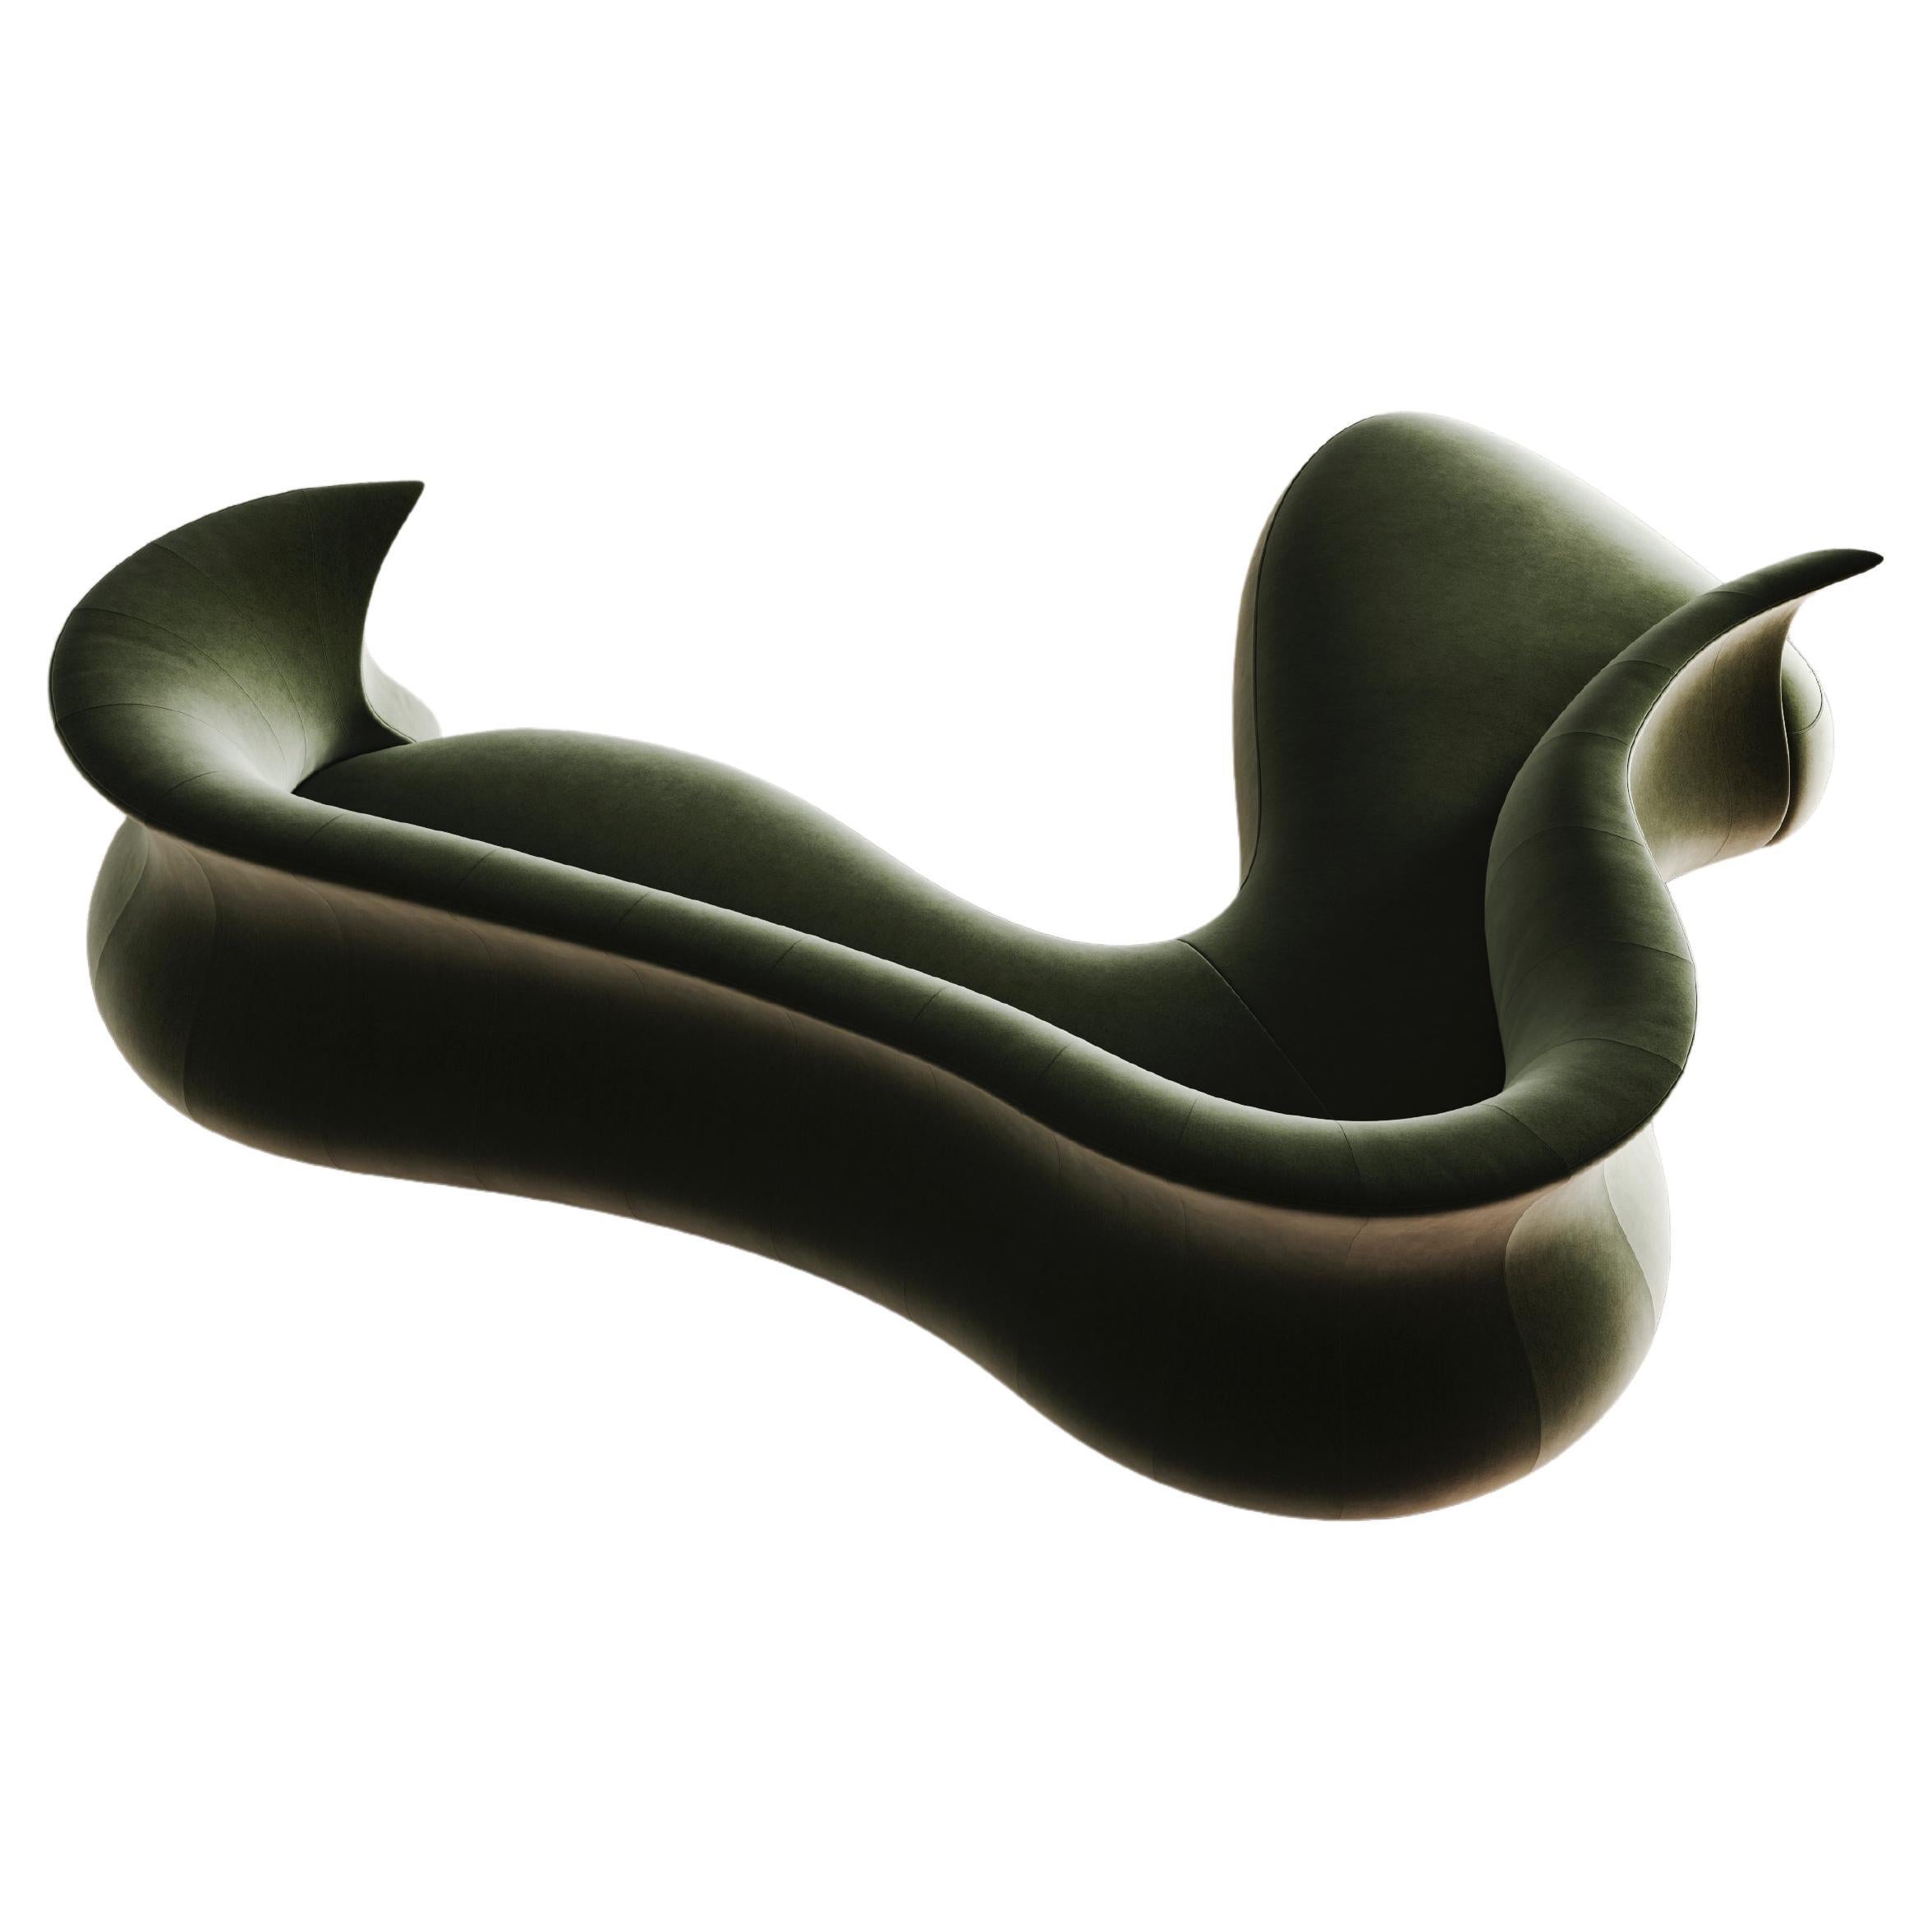 Modernist Contemporary Sculptural Handmade Curved Amphora Corner Sofa For Sale